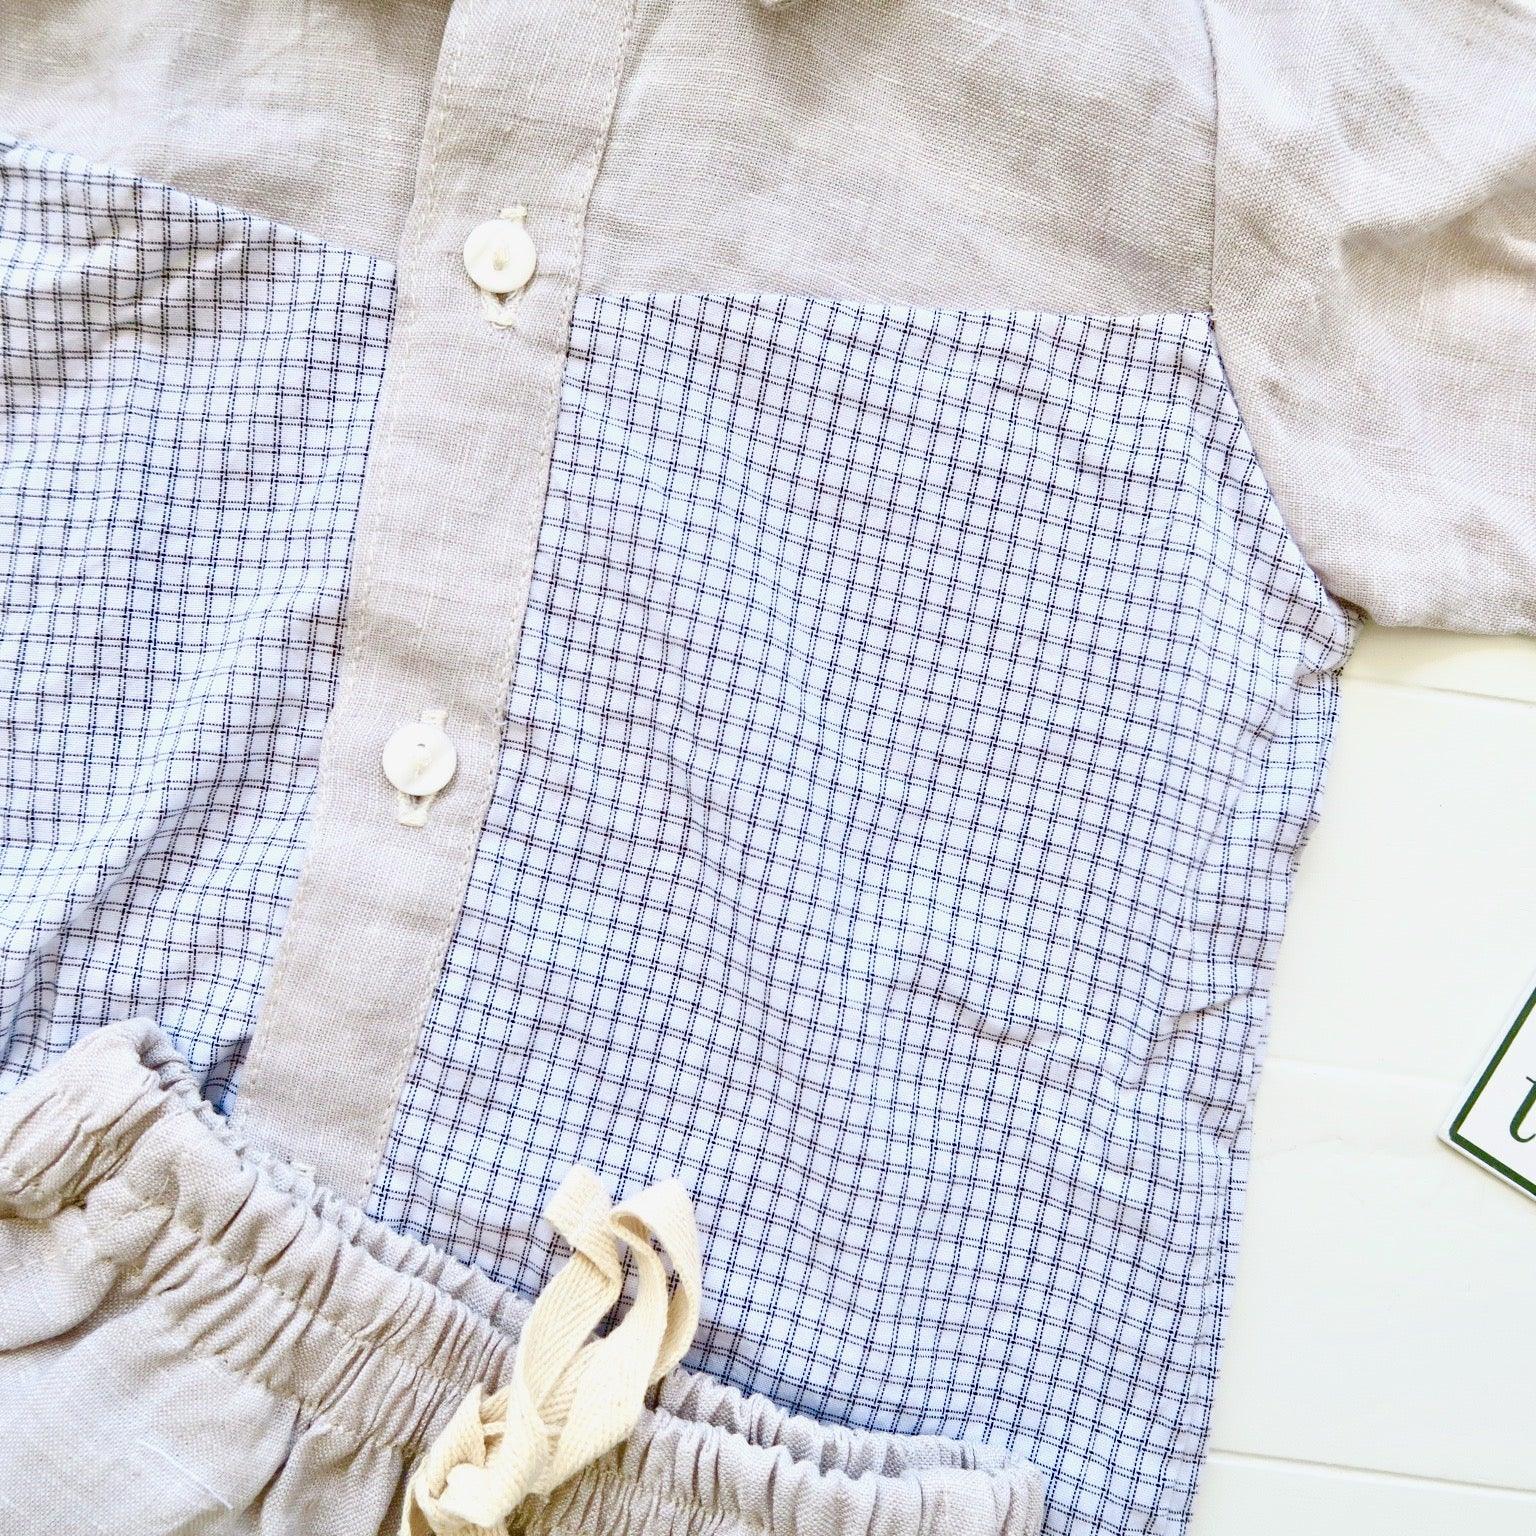 Birch Top & Shorts in Graphite Checkered and Light Gray Linen - Lil' Tati